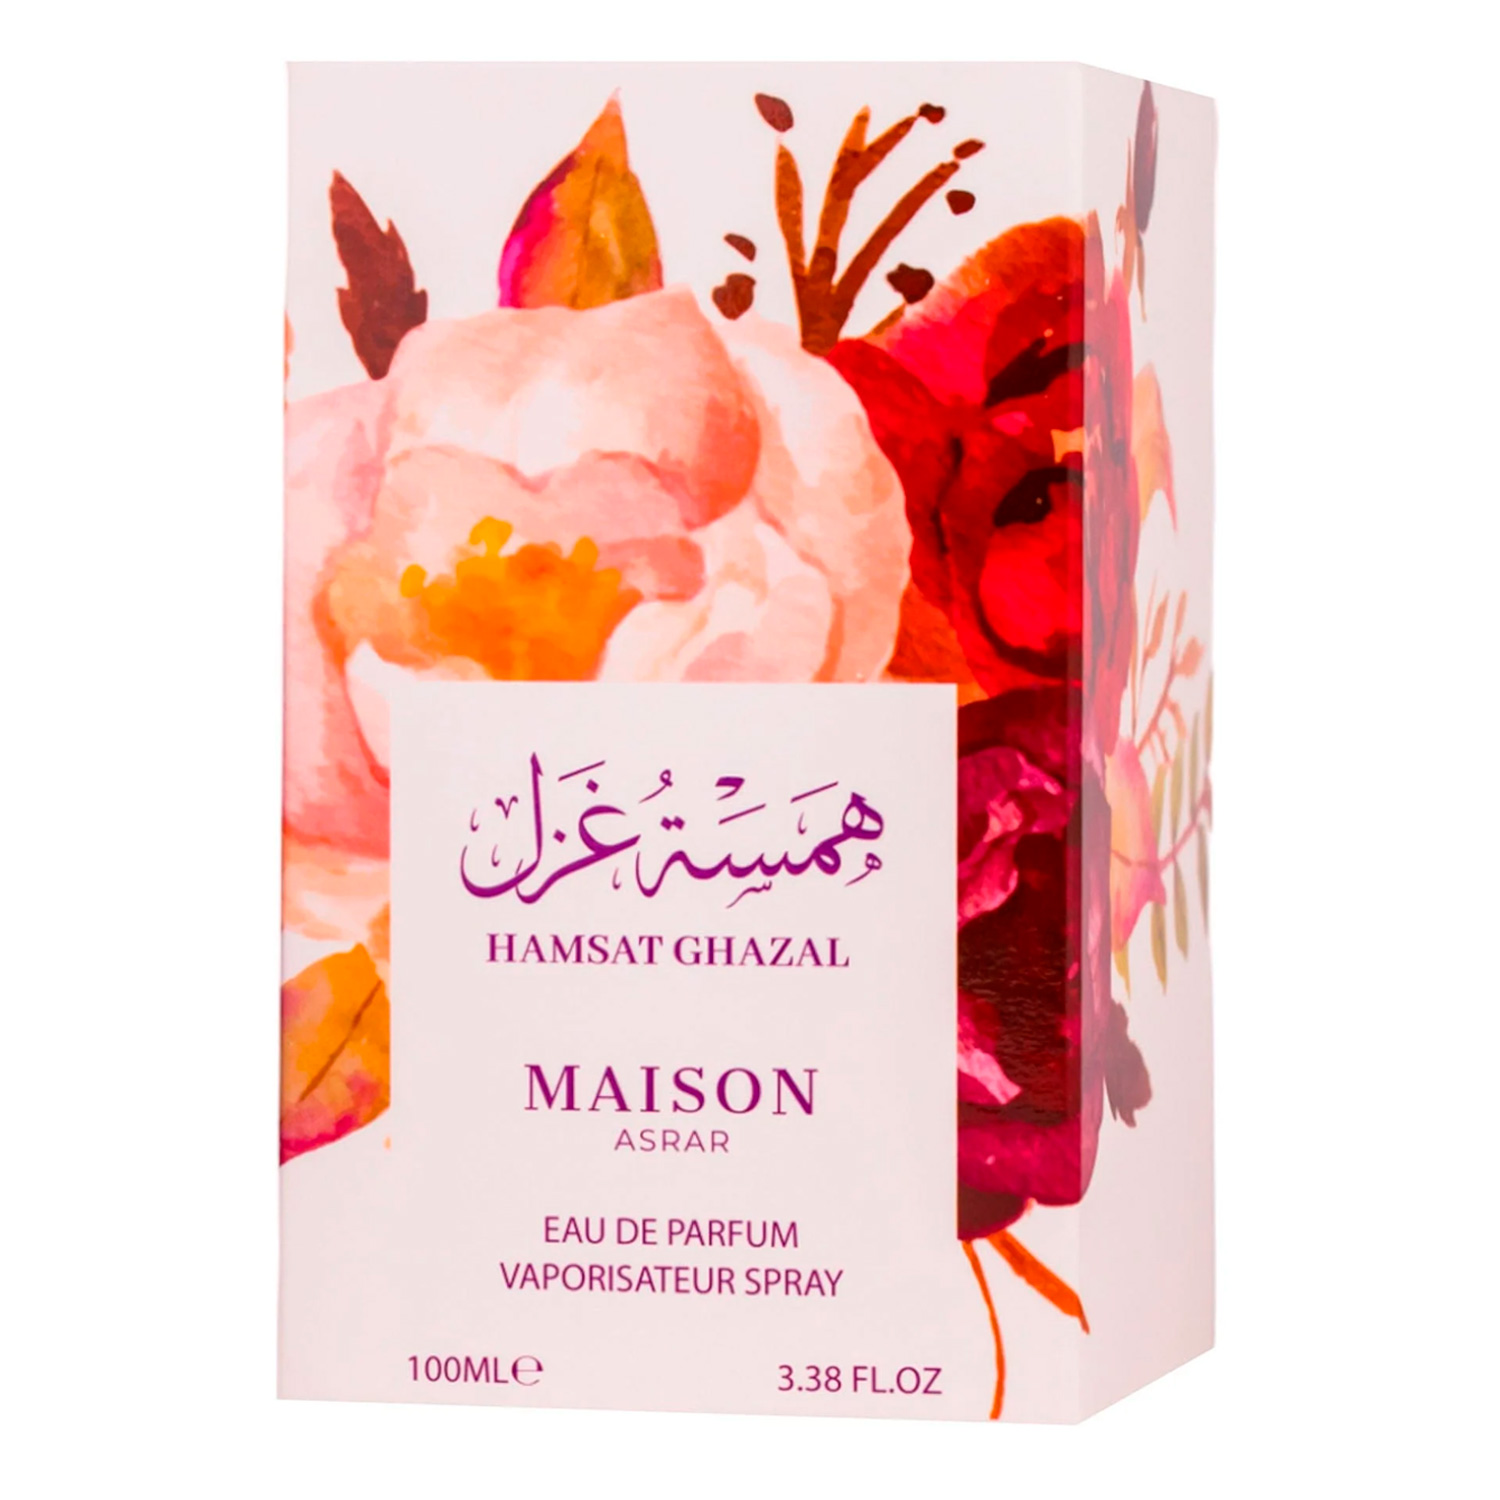 Perfume Maison Asrar Hamsat Ghazal Eau de Parfum Feminino 100ml